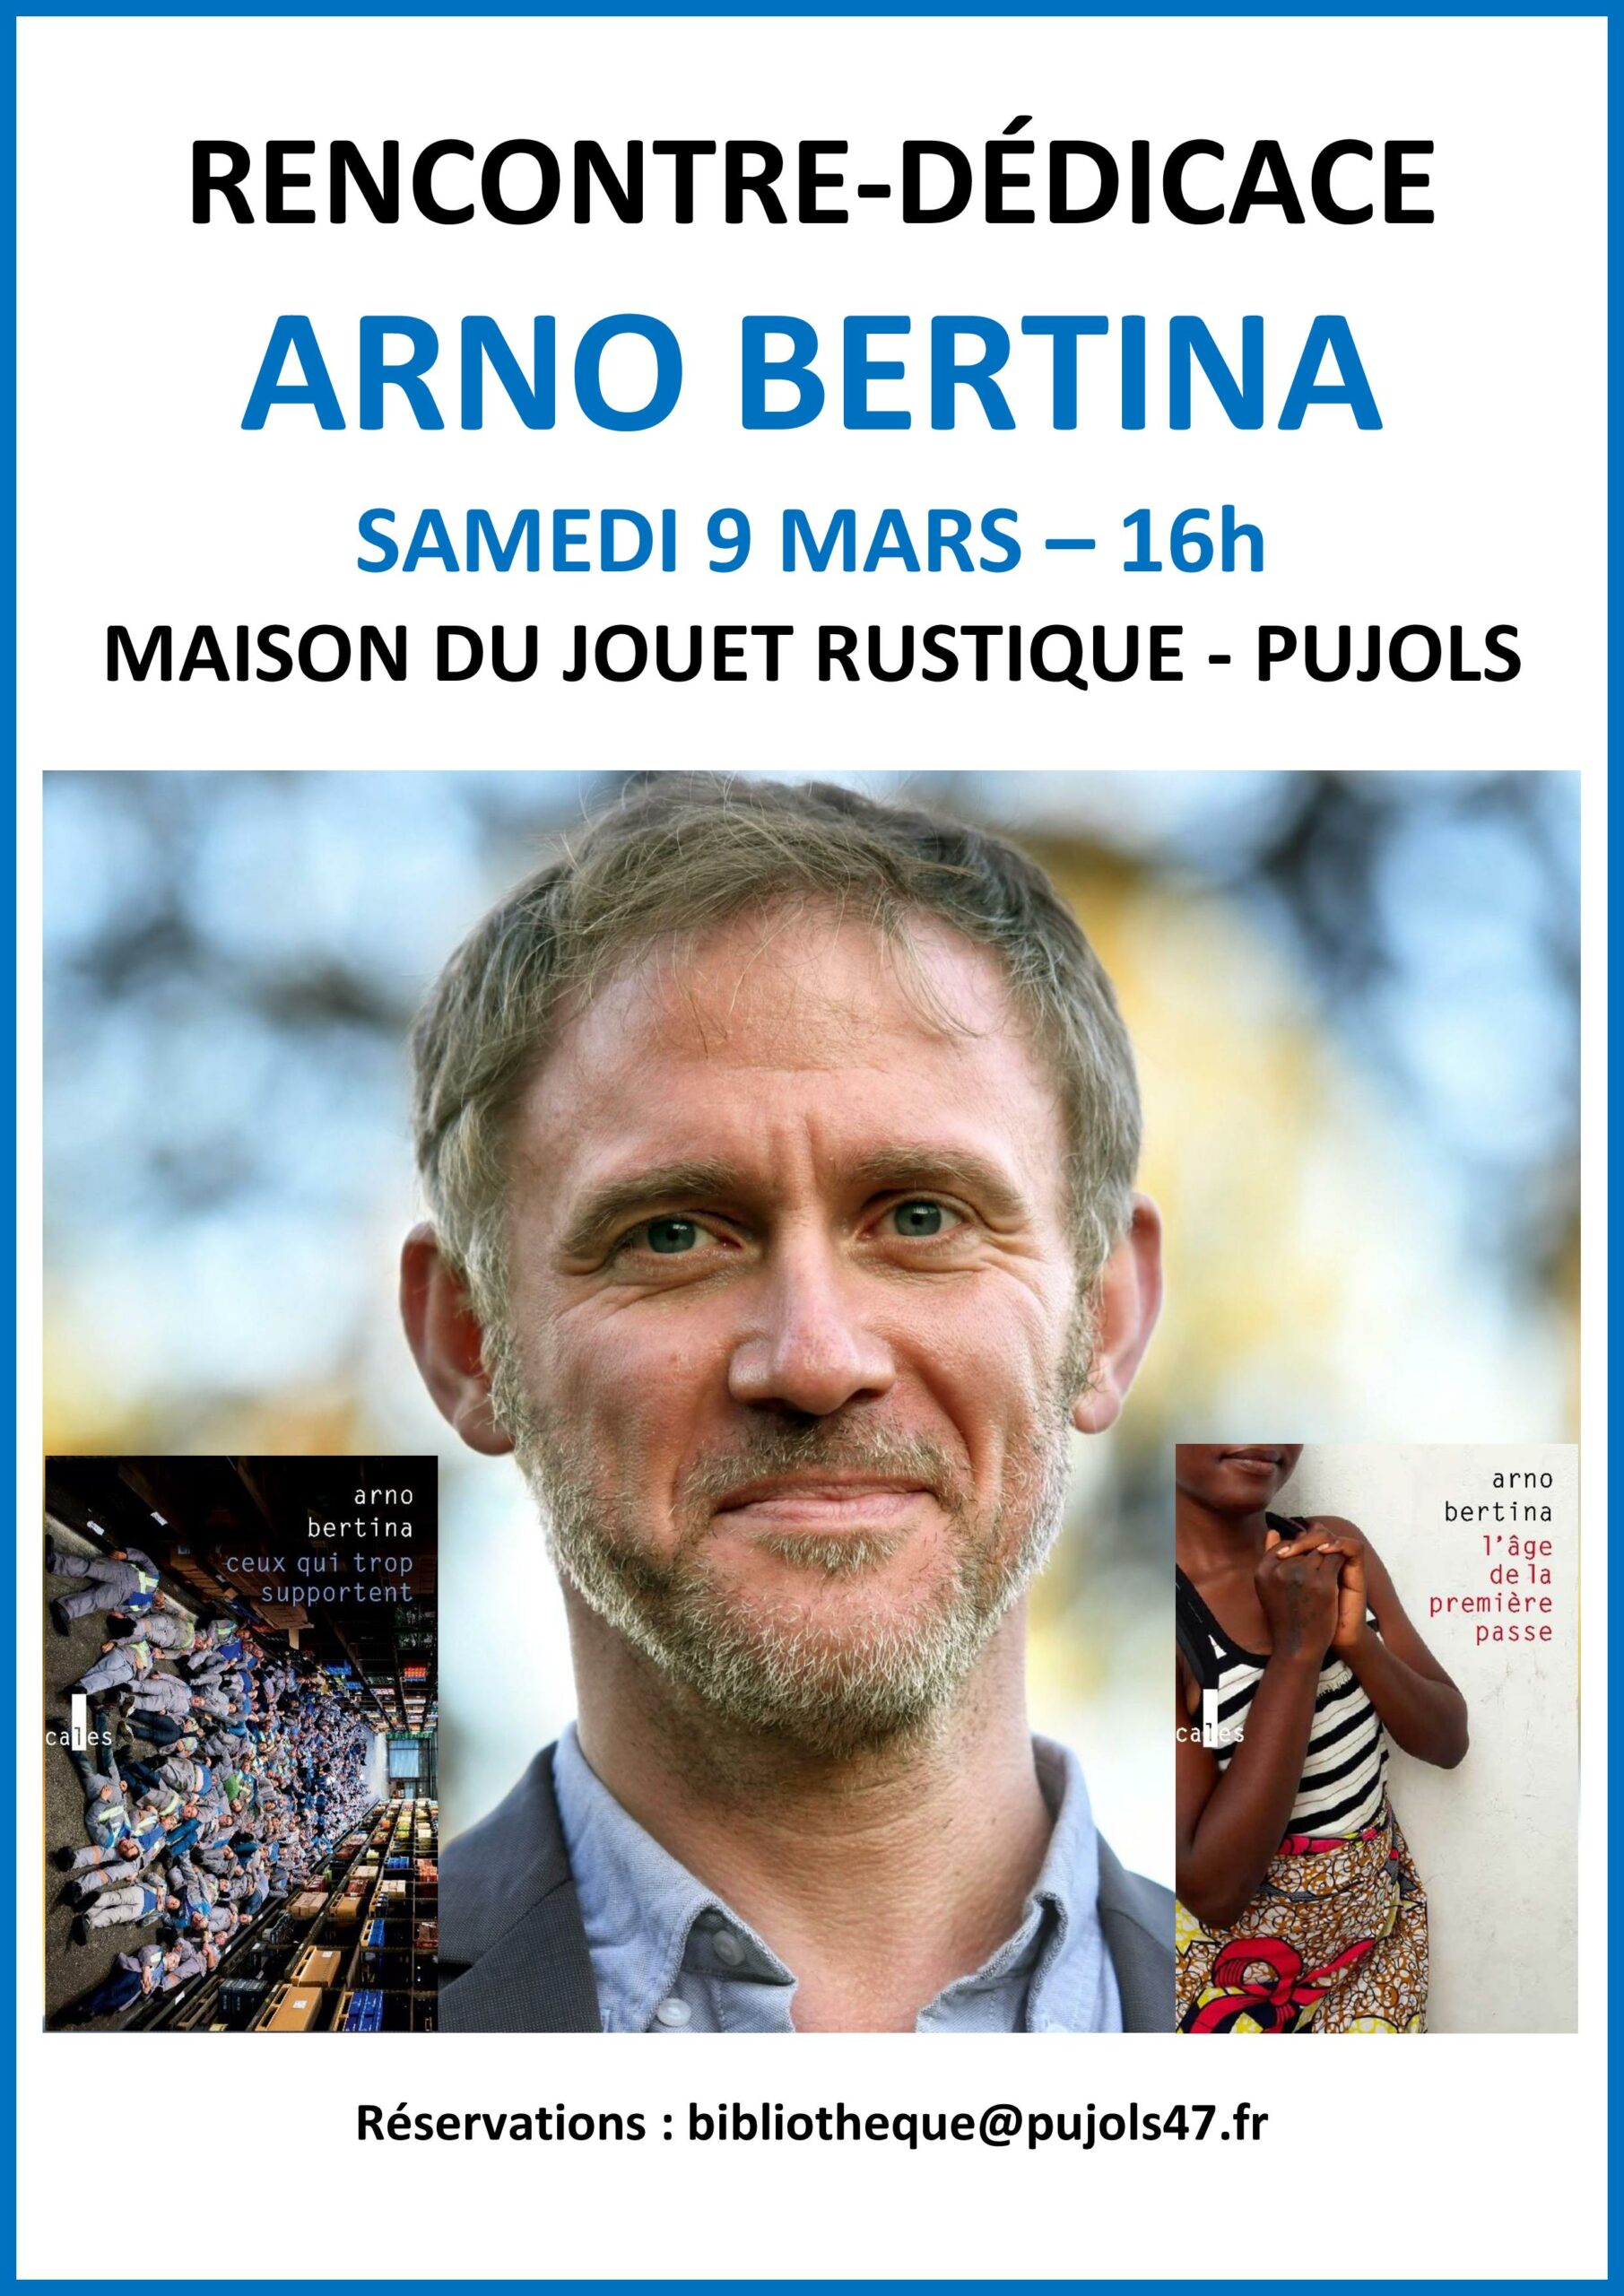 Rencontre avec Arno Bertina à Pujols